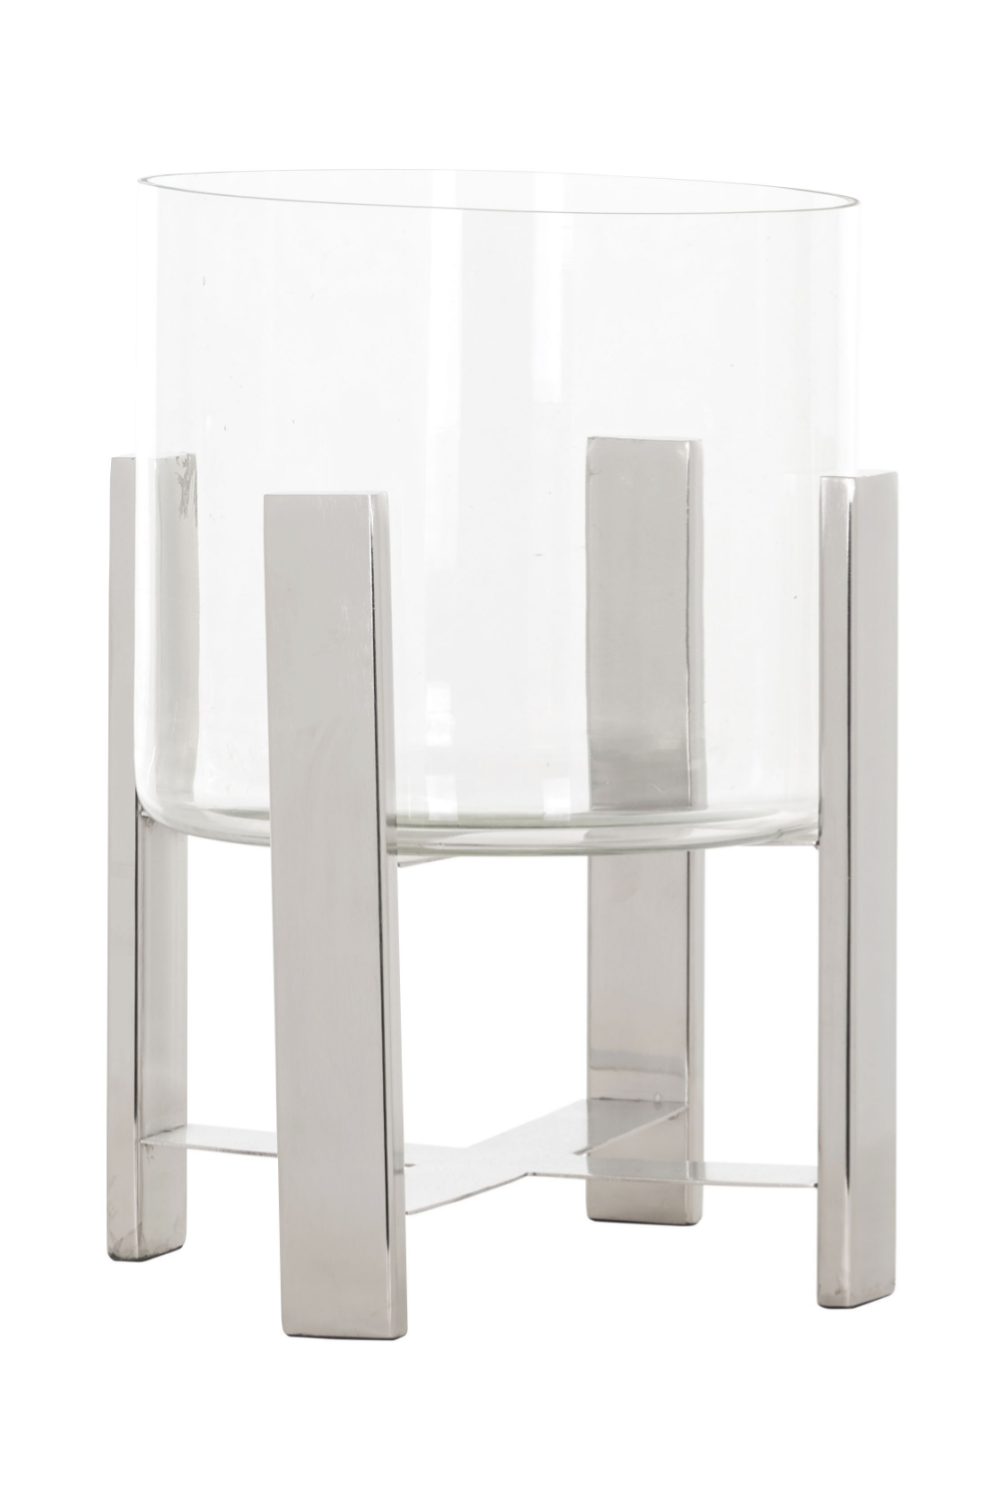 Silver Steel Bars Glass Lantern | OROA Tiko | OROA